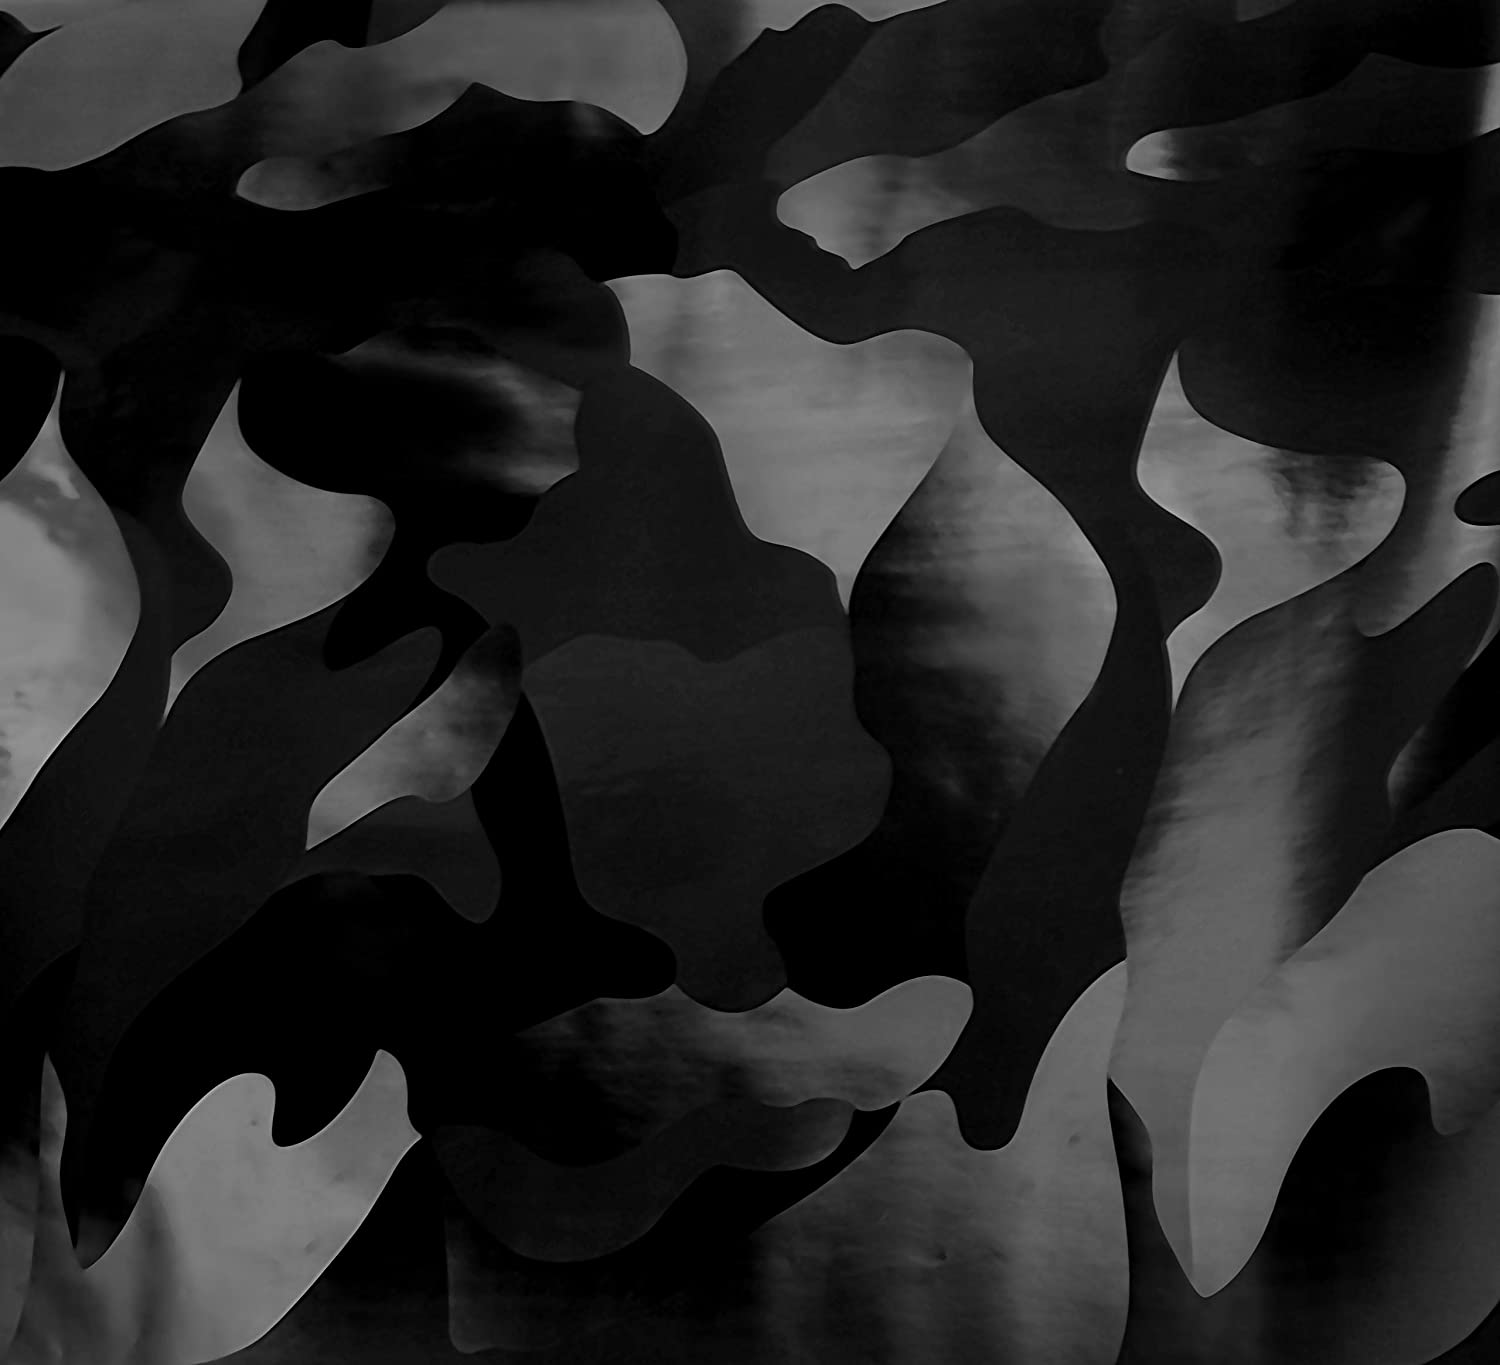 VVIVID+ Black Stealth Camouflage Large Pattern